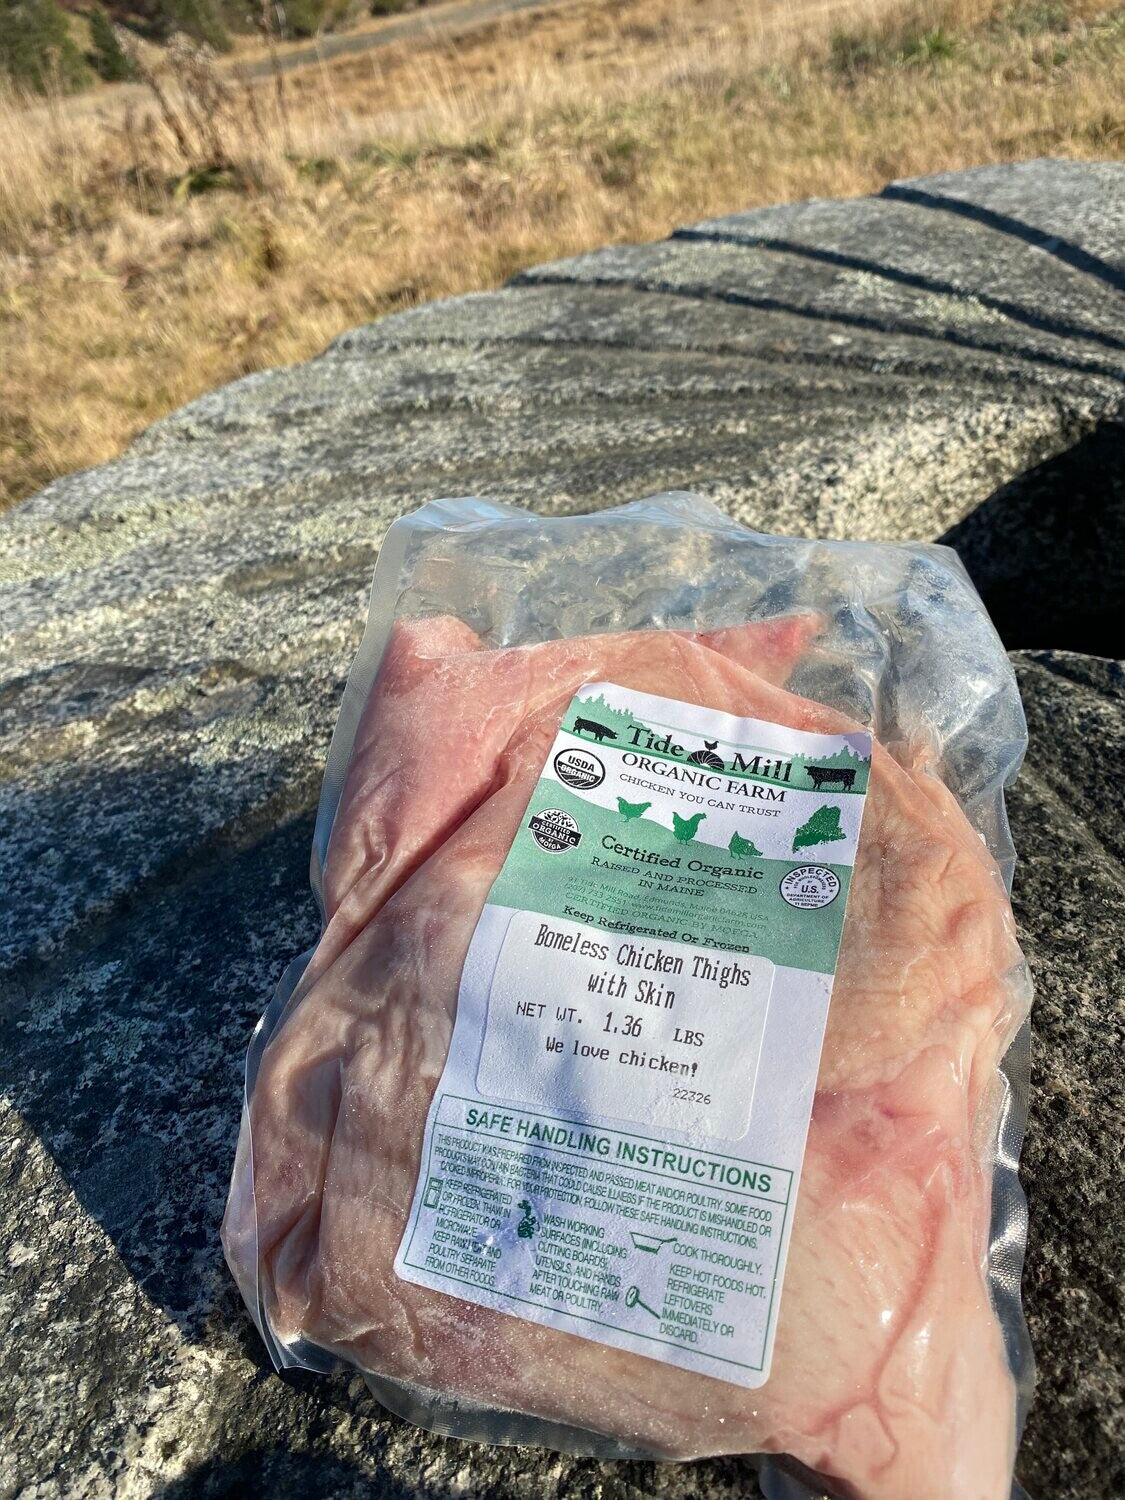 A package of boneless organic chicken thighs